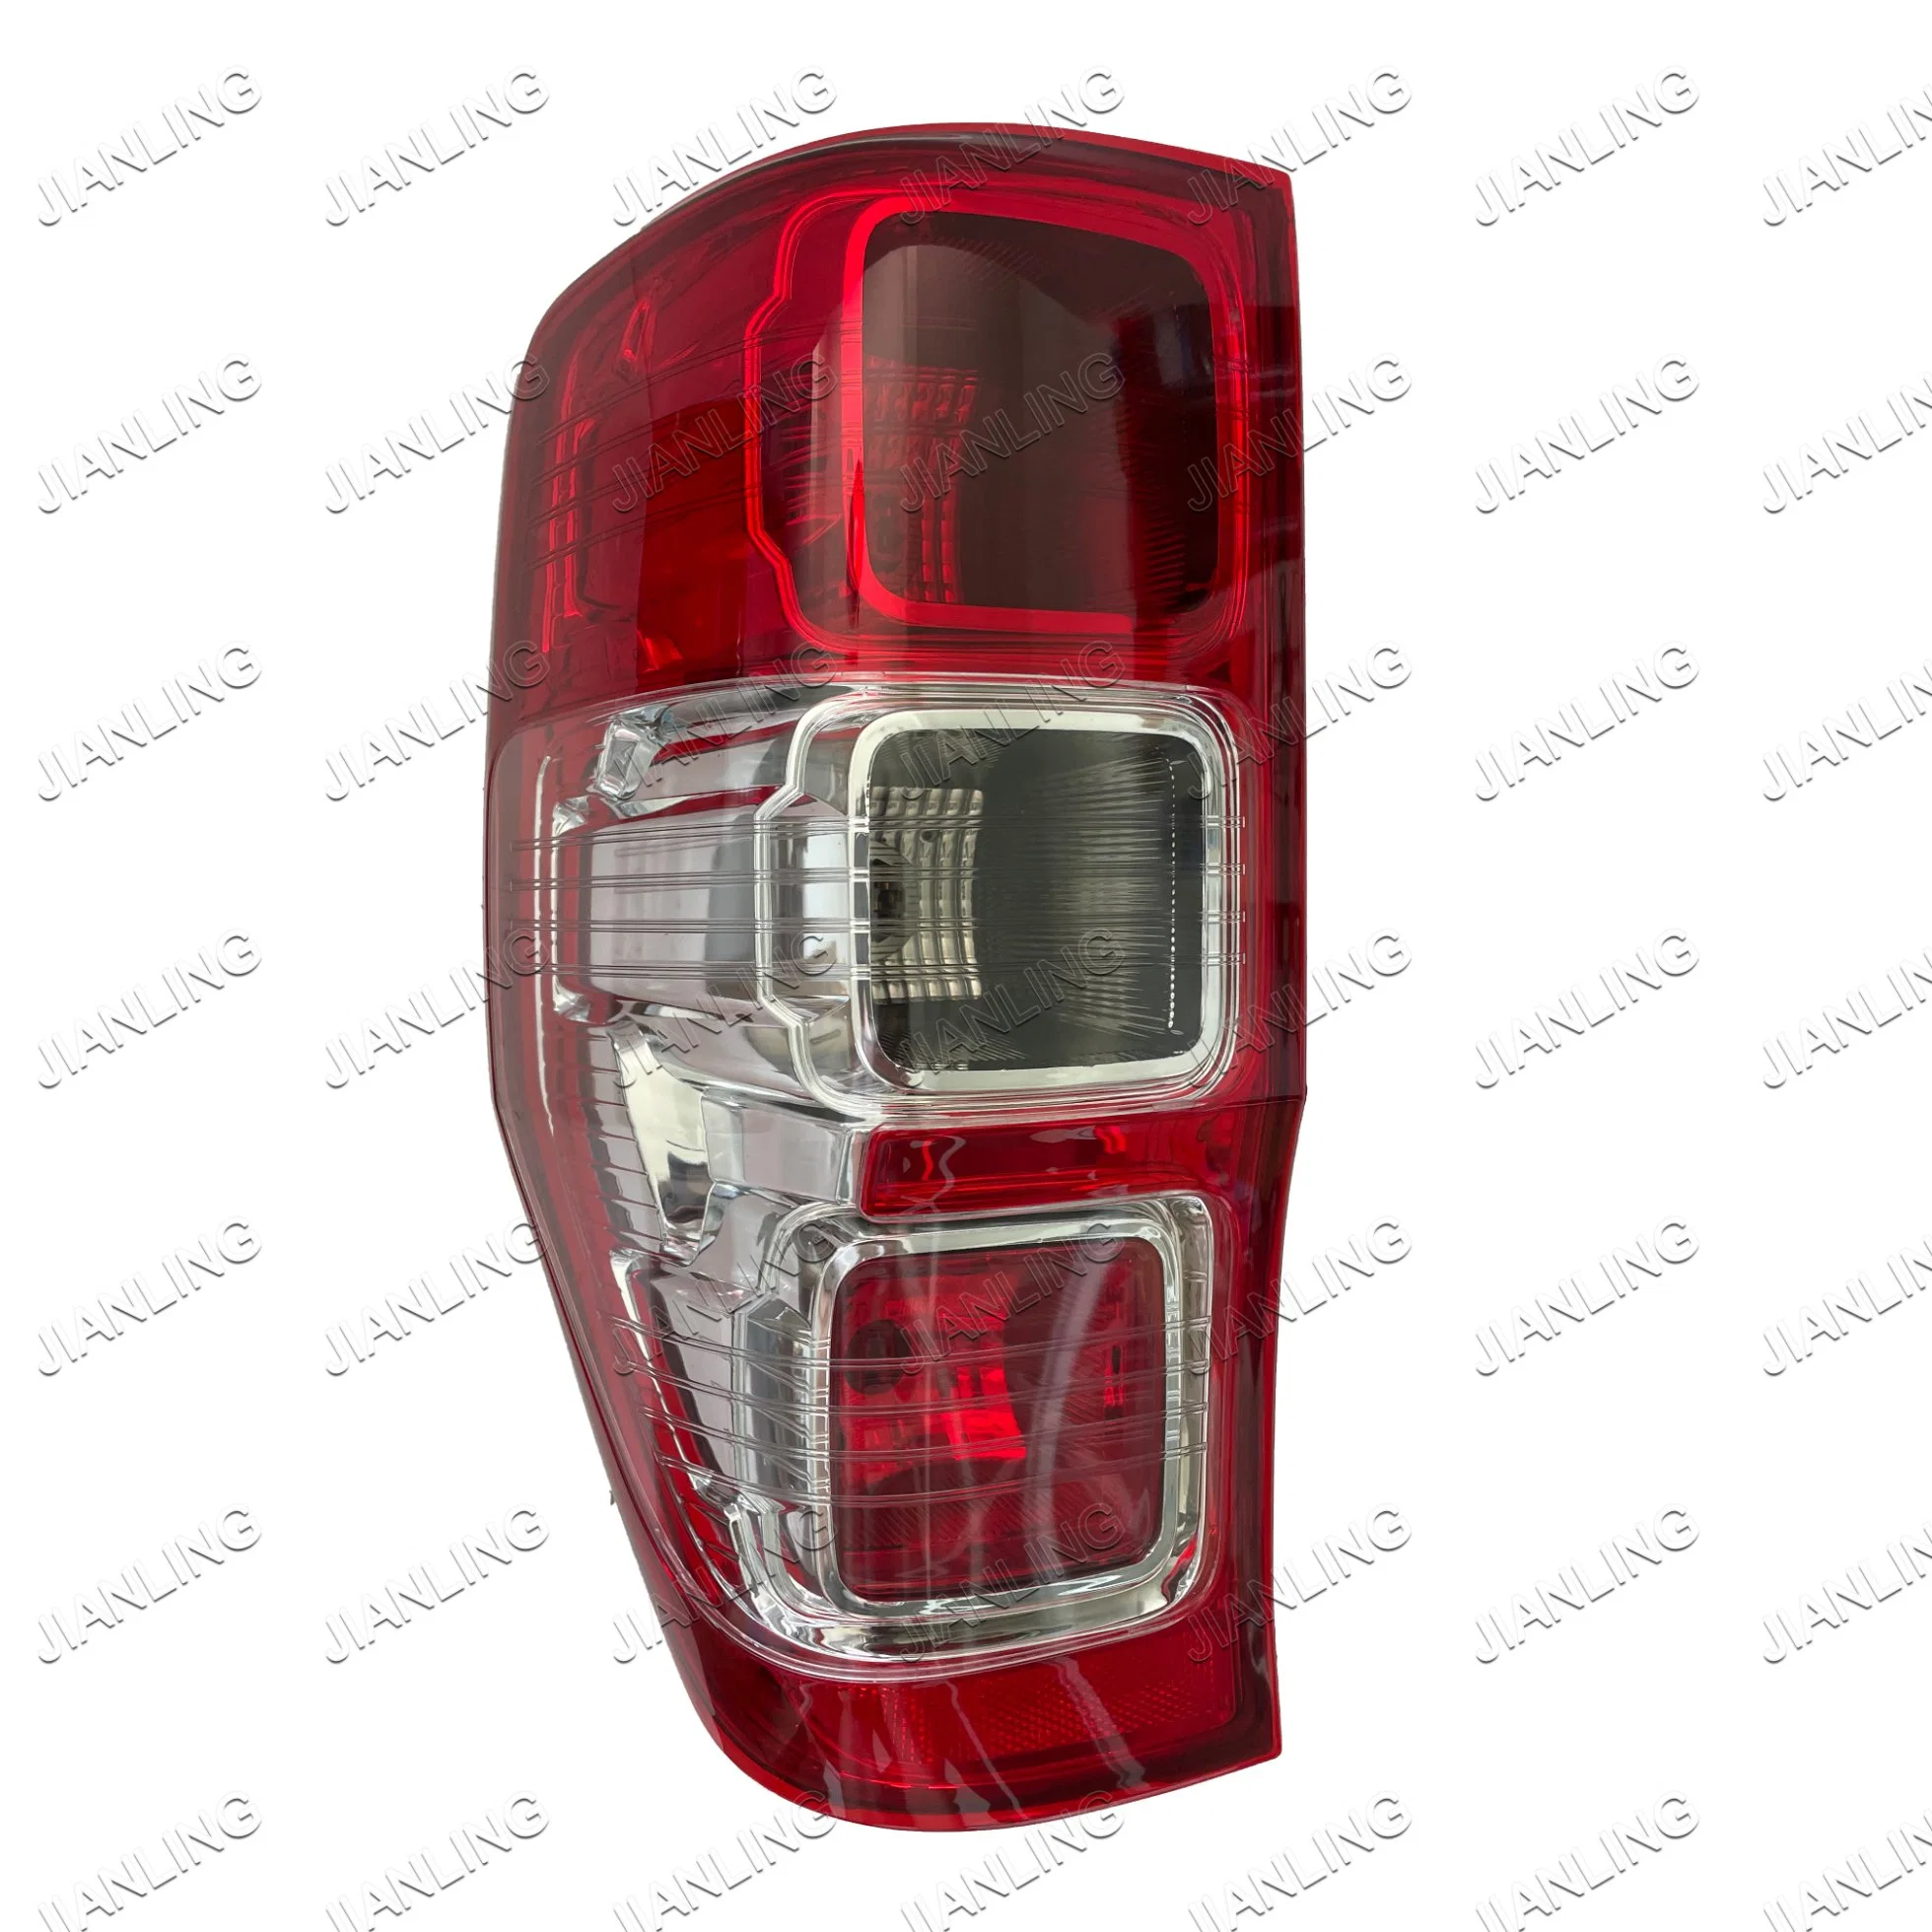 Auto Pick-up a Lâmpada da Lanterna Traseira para a Ford Ranger 2012 Ab39-1340439-13405 AB